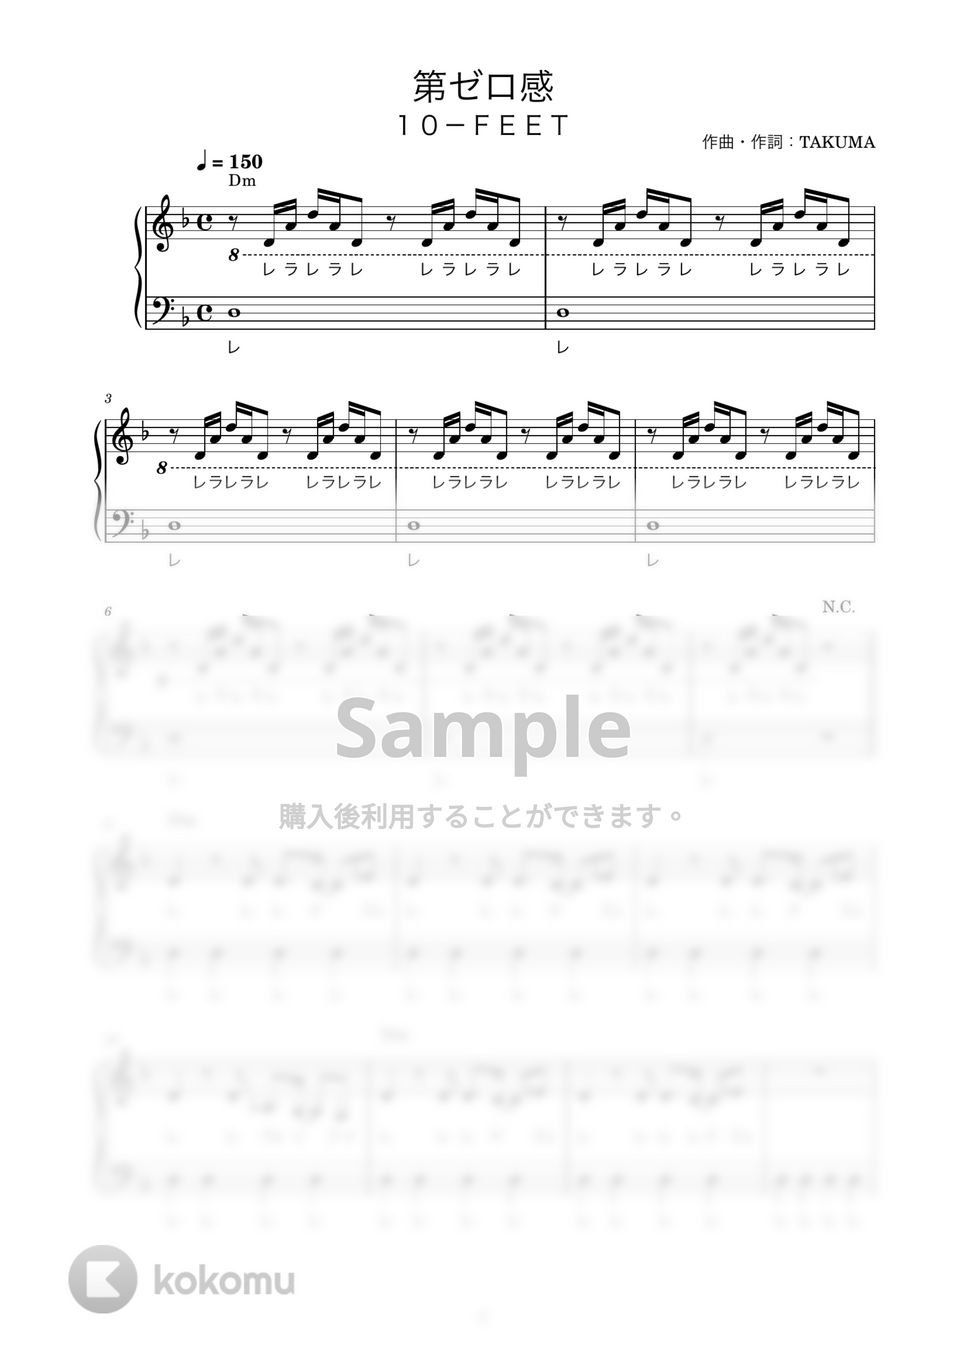 10-FEET - 第ゼロ感 (かんたん / 歌詞付き / ドレミ付き / 初心者) by piano.tokyo